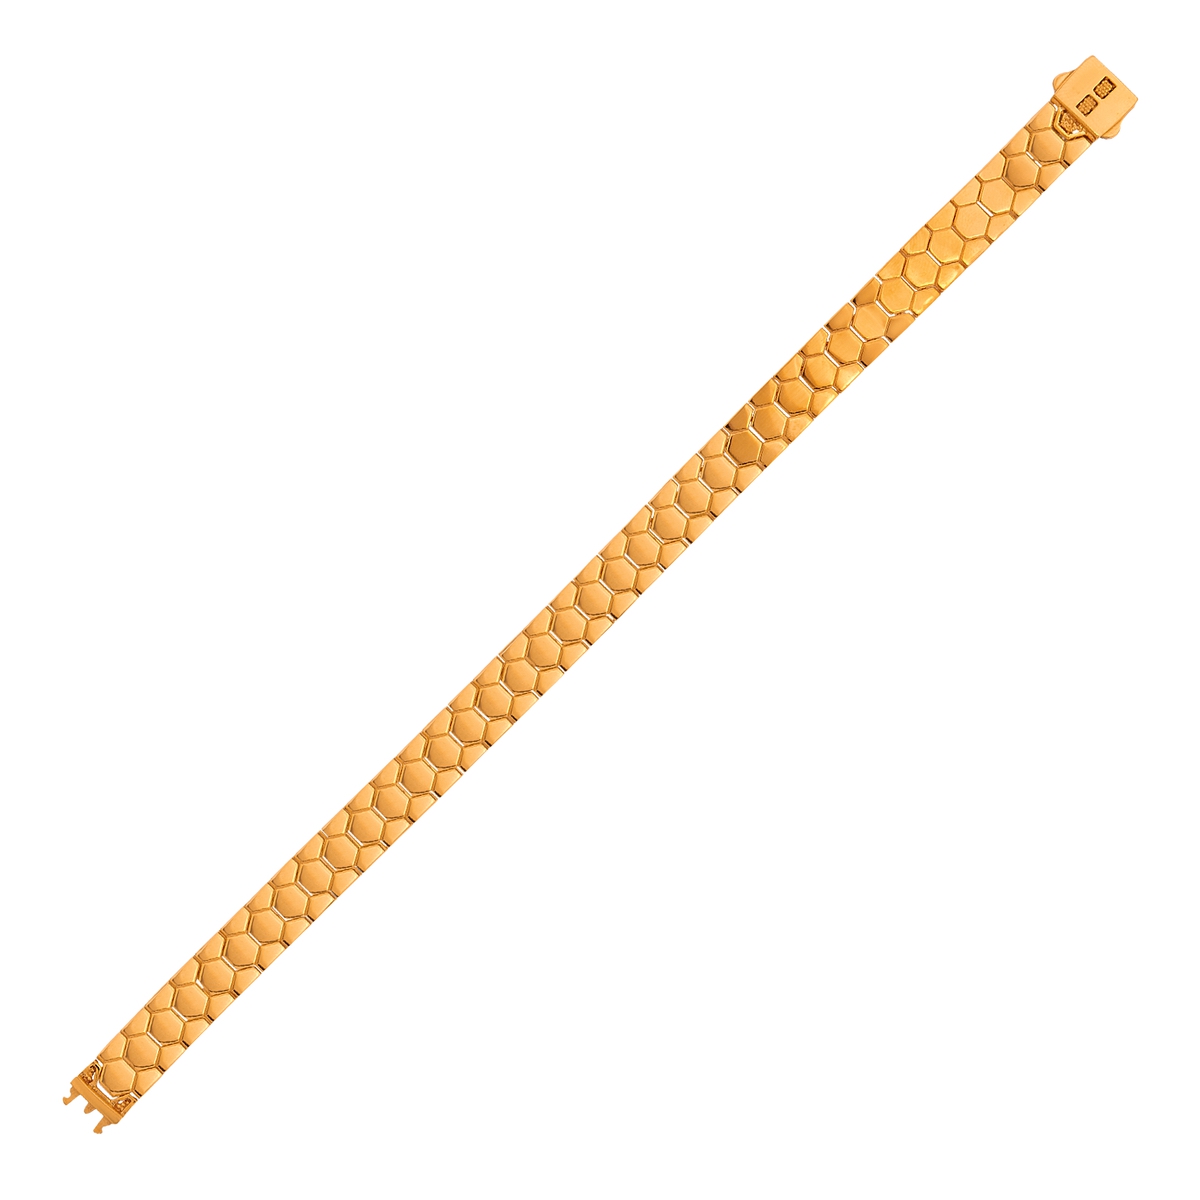 21K 0.410 ct Gold Bracelet